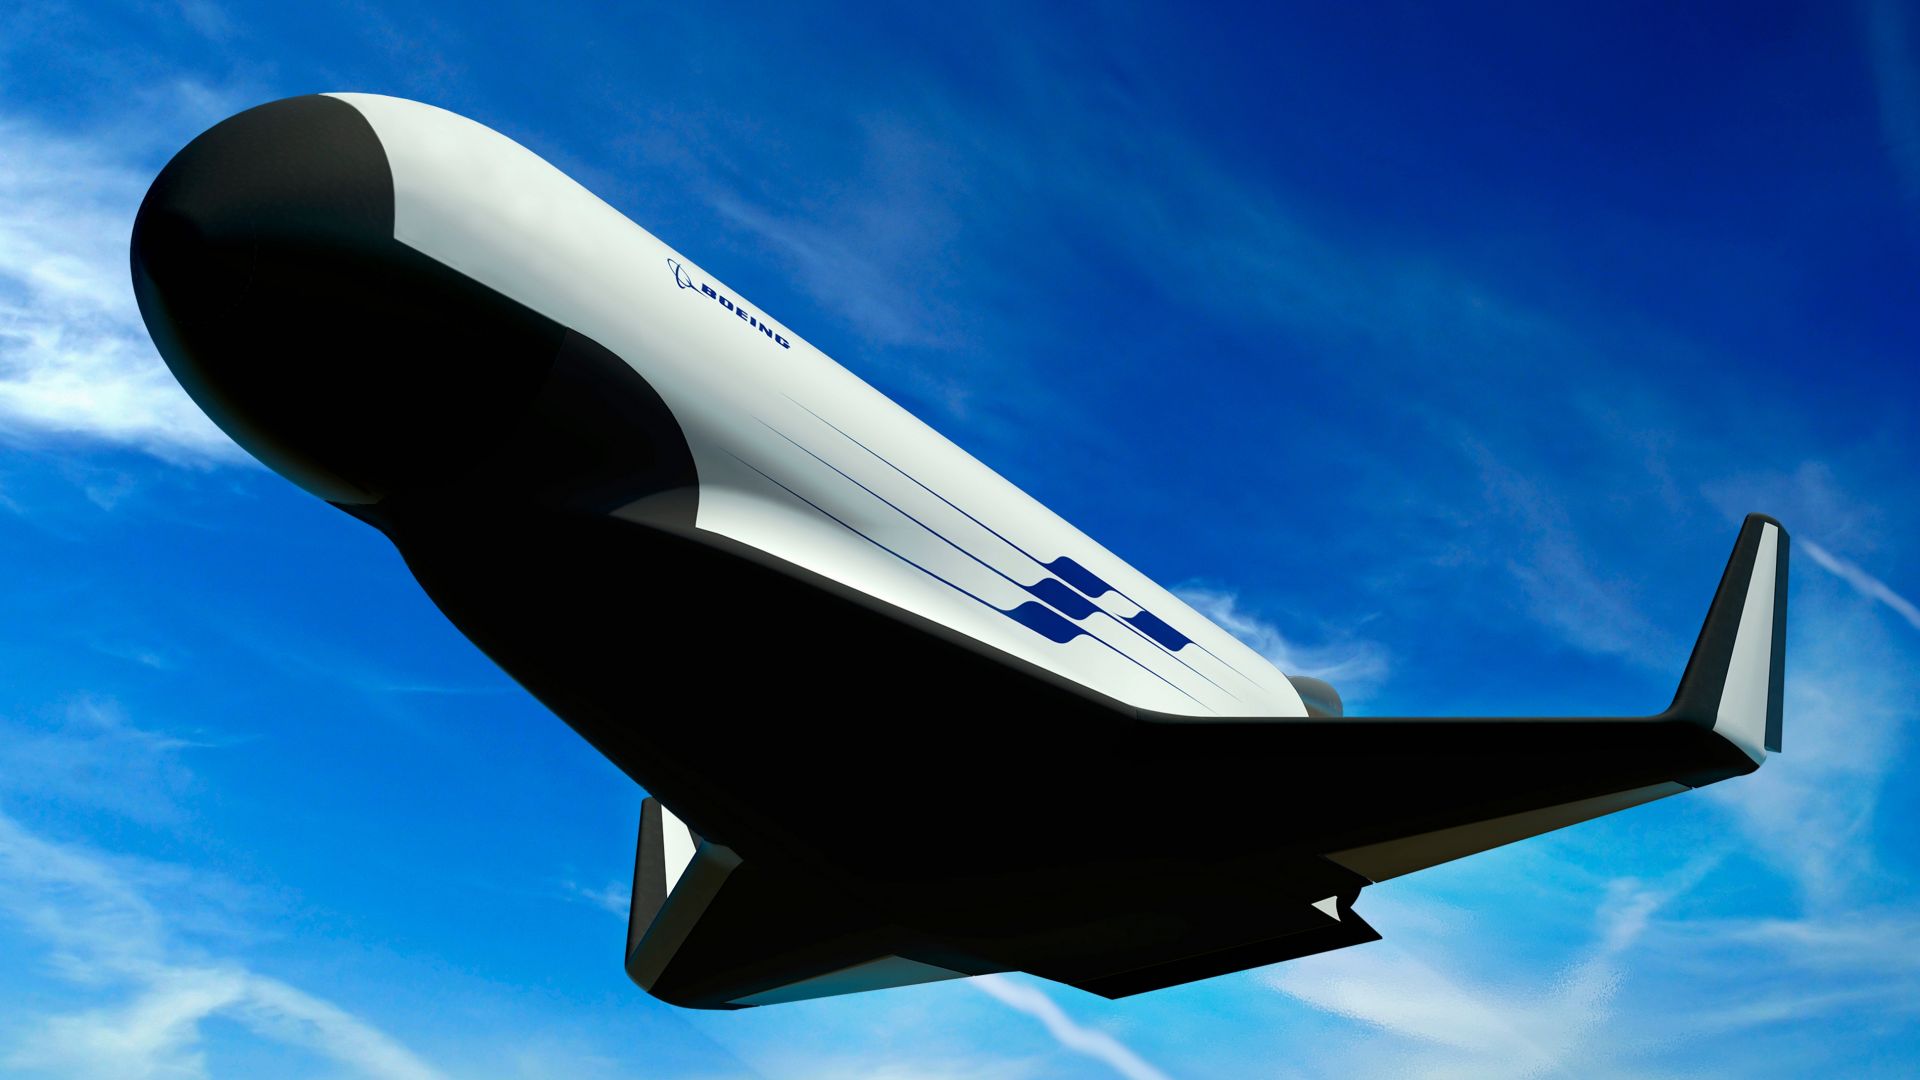 ИксС Космический Корабль, Боинг, концепт, дрон, XS 1 Spaceplane, BOEING, military, concept,  (horizontal)